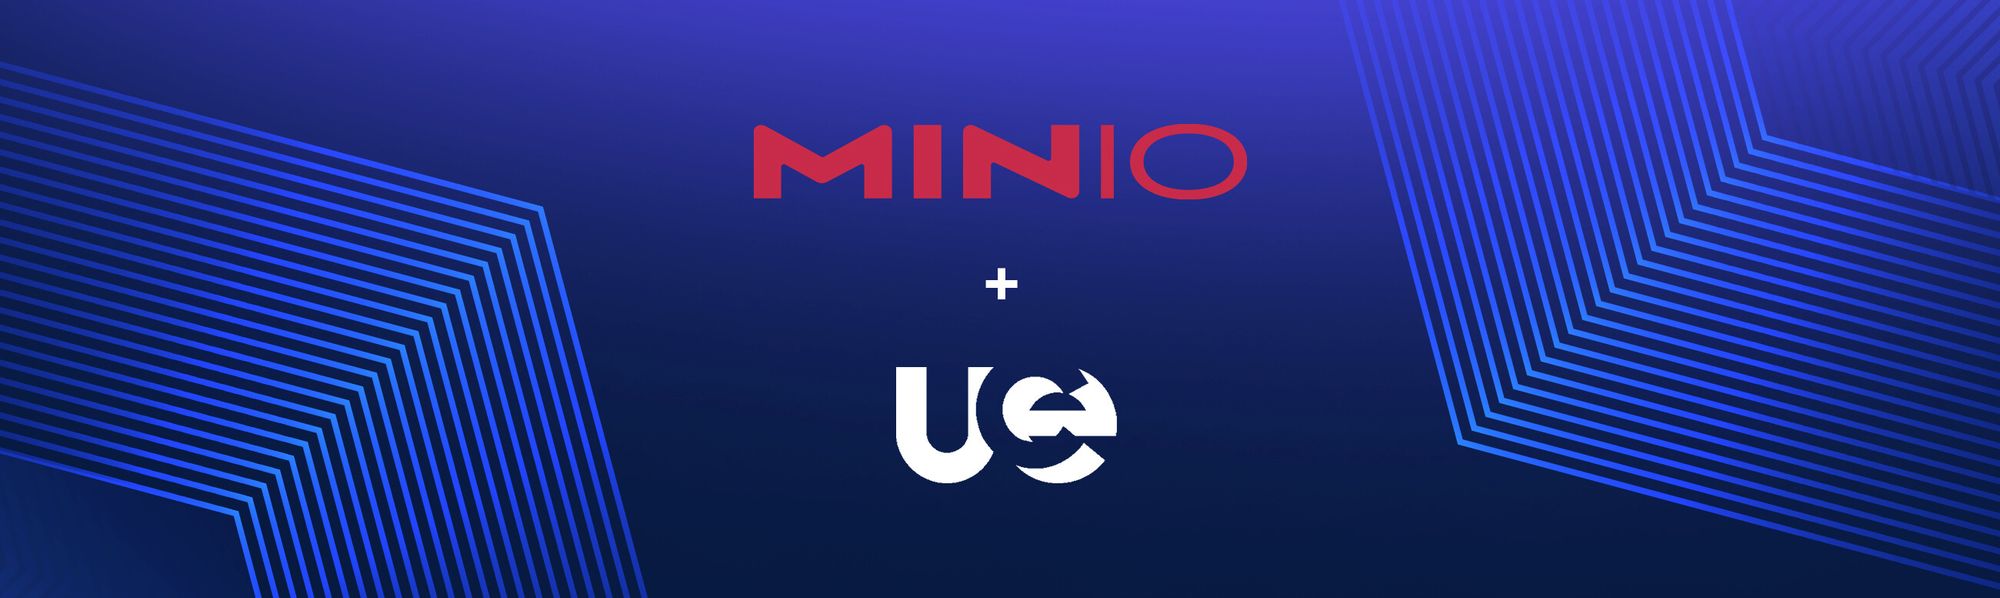 MinIO and UCE Partnership